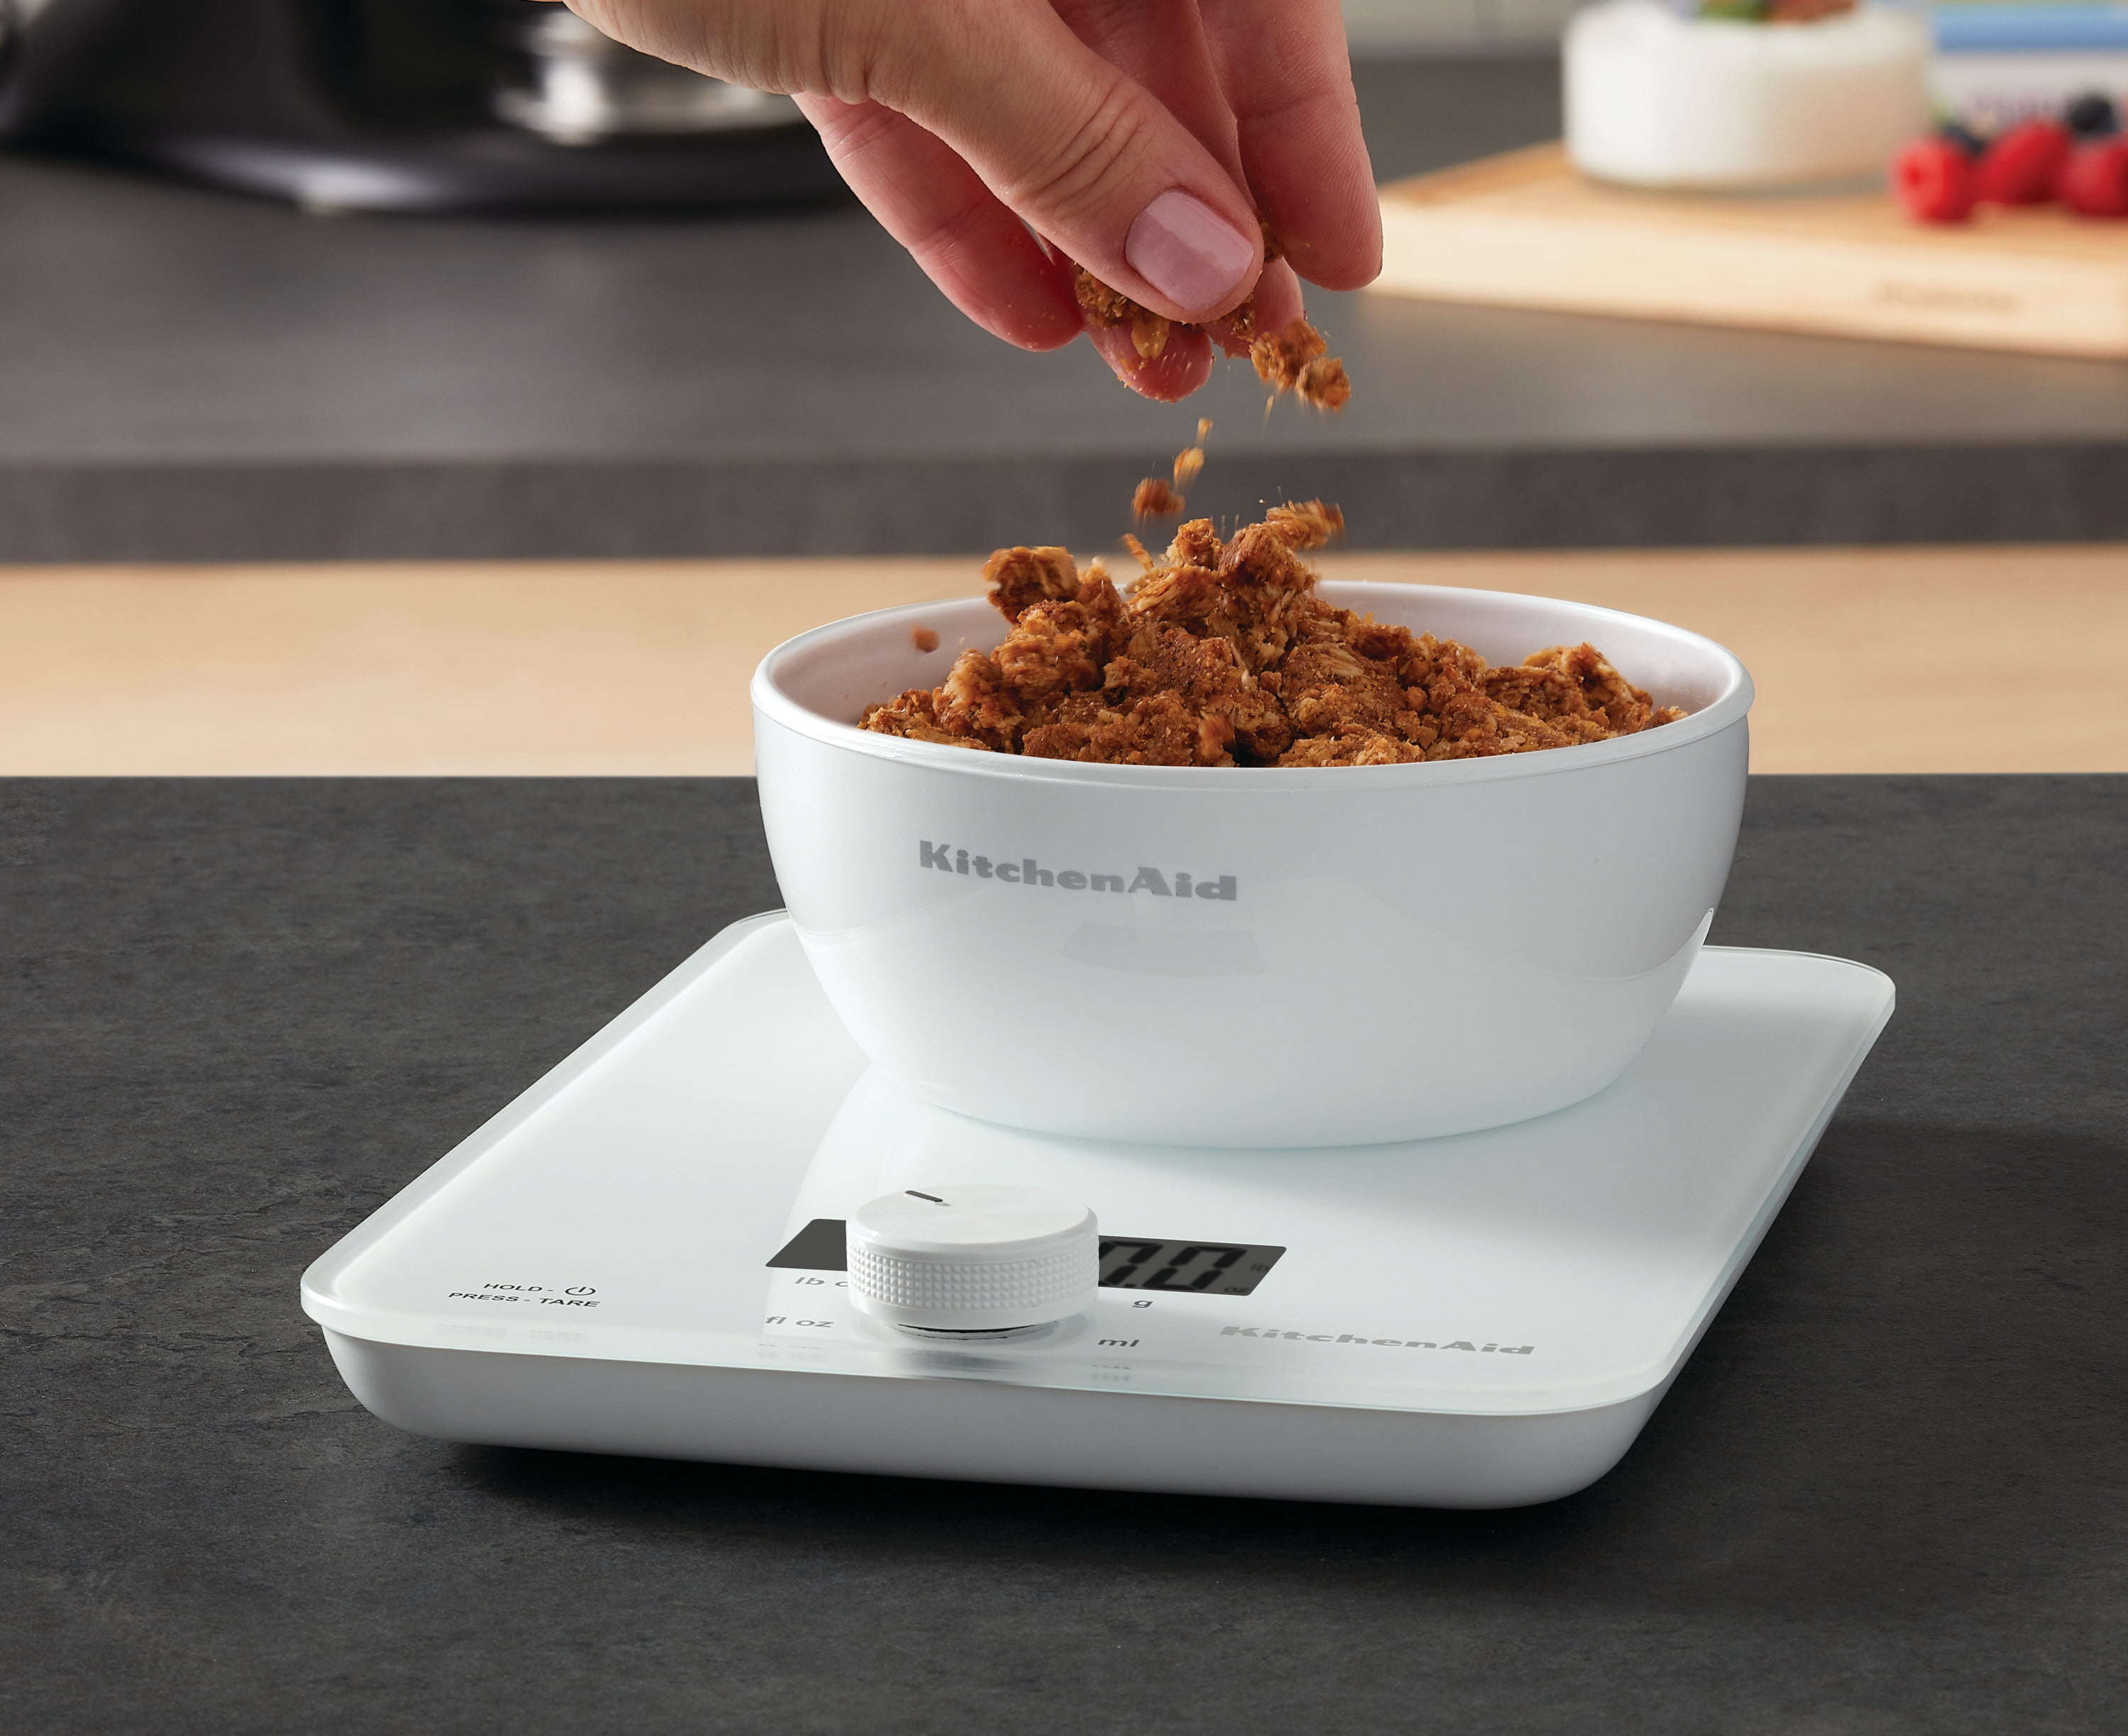 Kiaitre Digital Food Scale - 11lb/5kg Kitchen Scales Digital